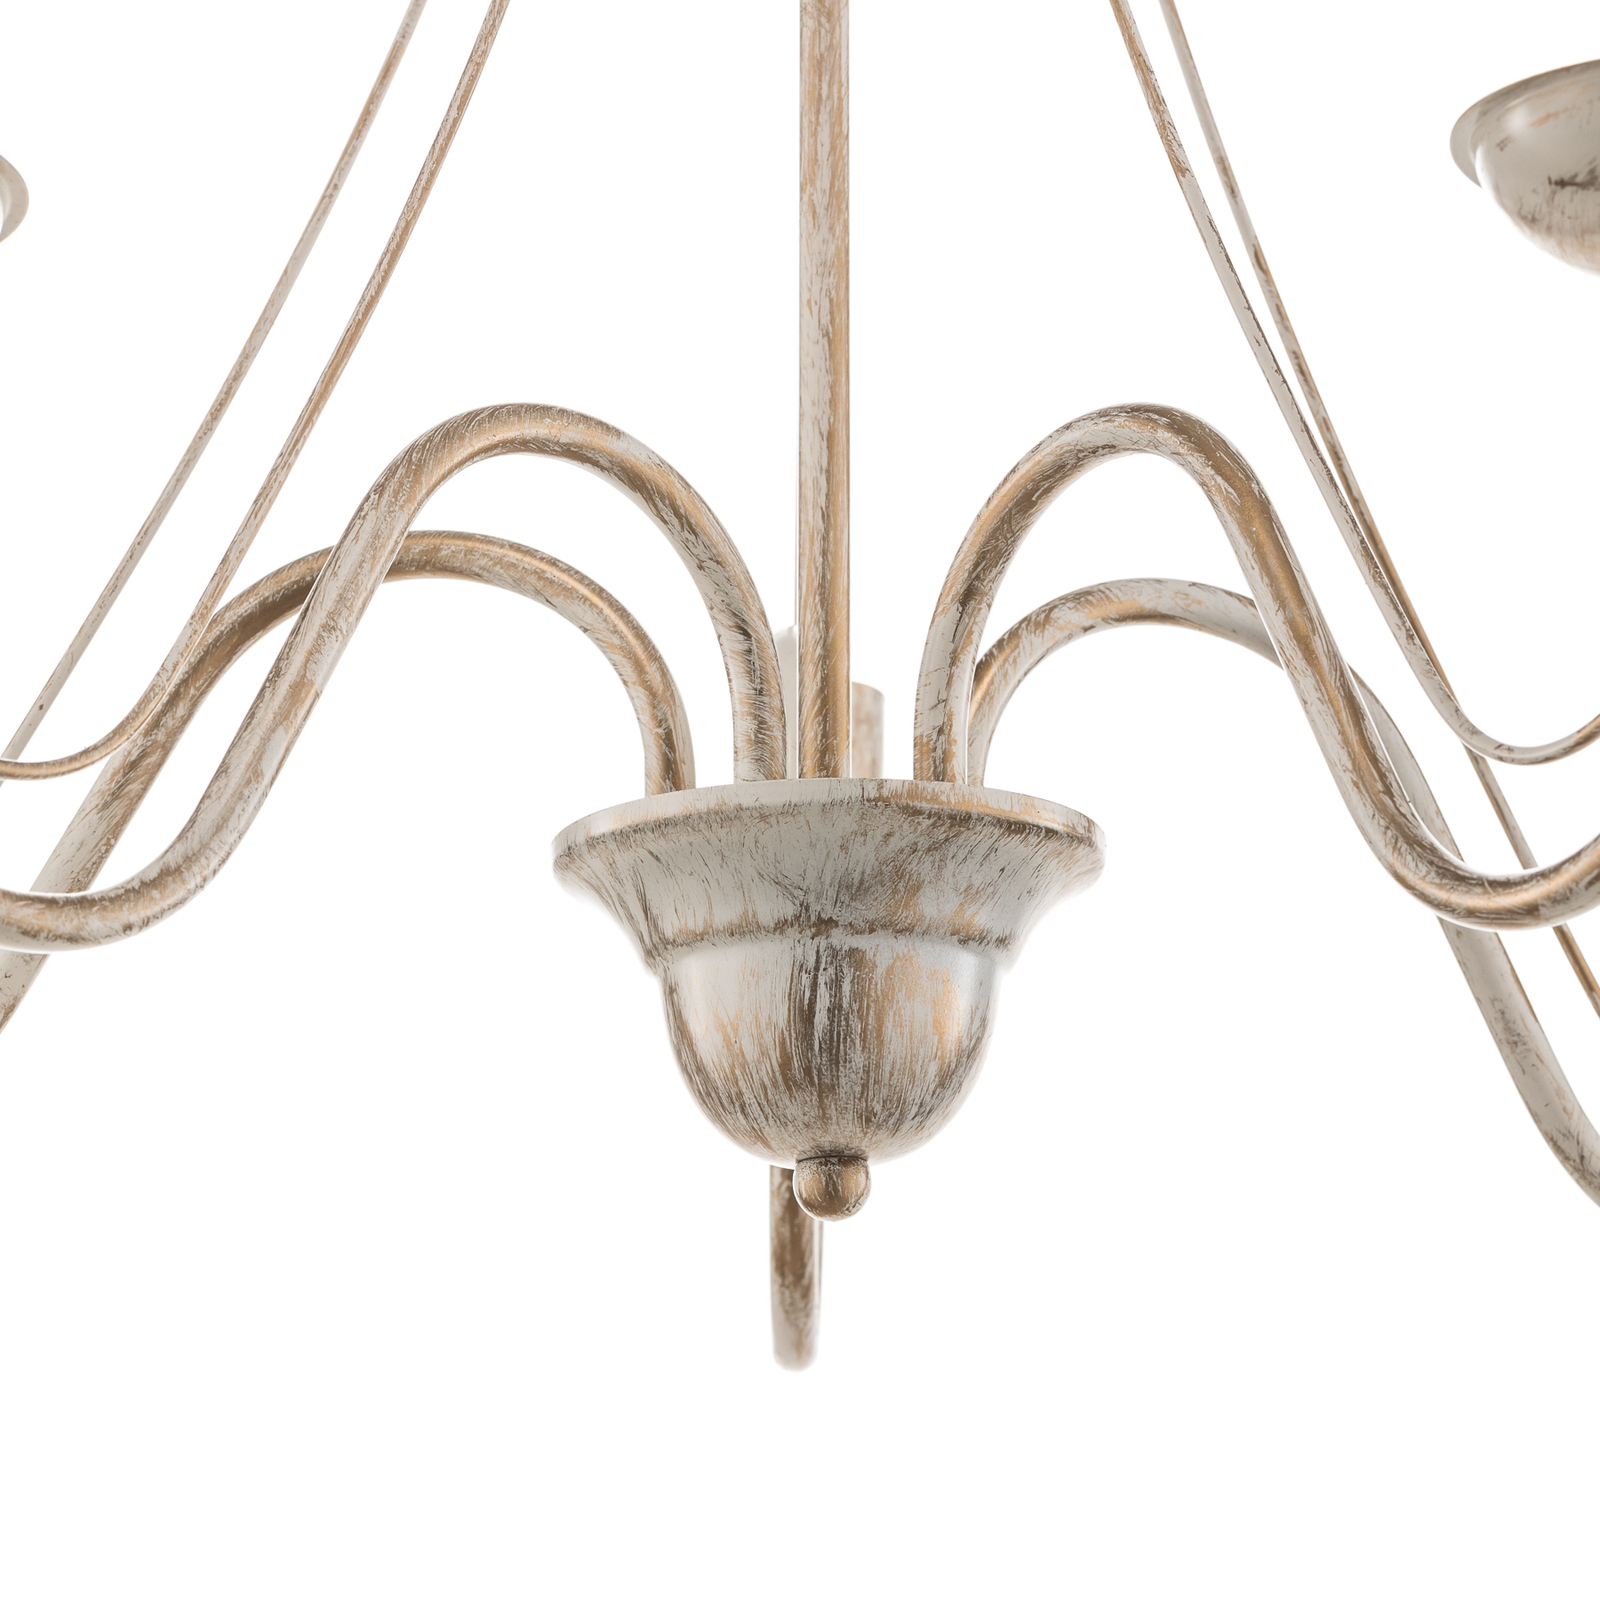 Malbo 5-bulb chandelier in white